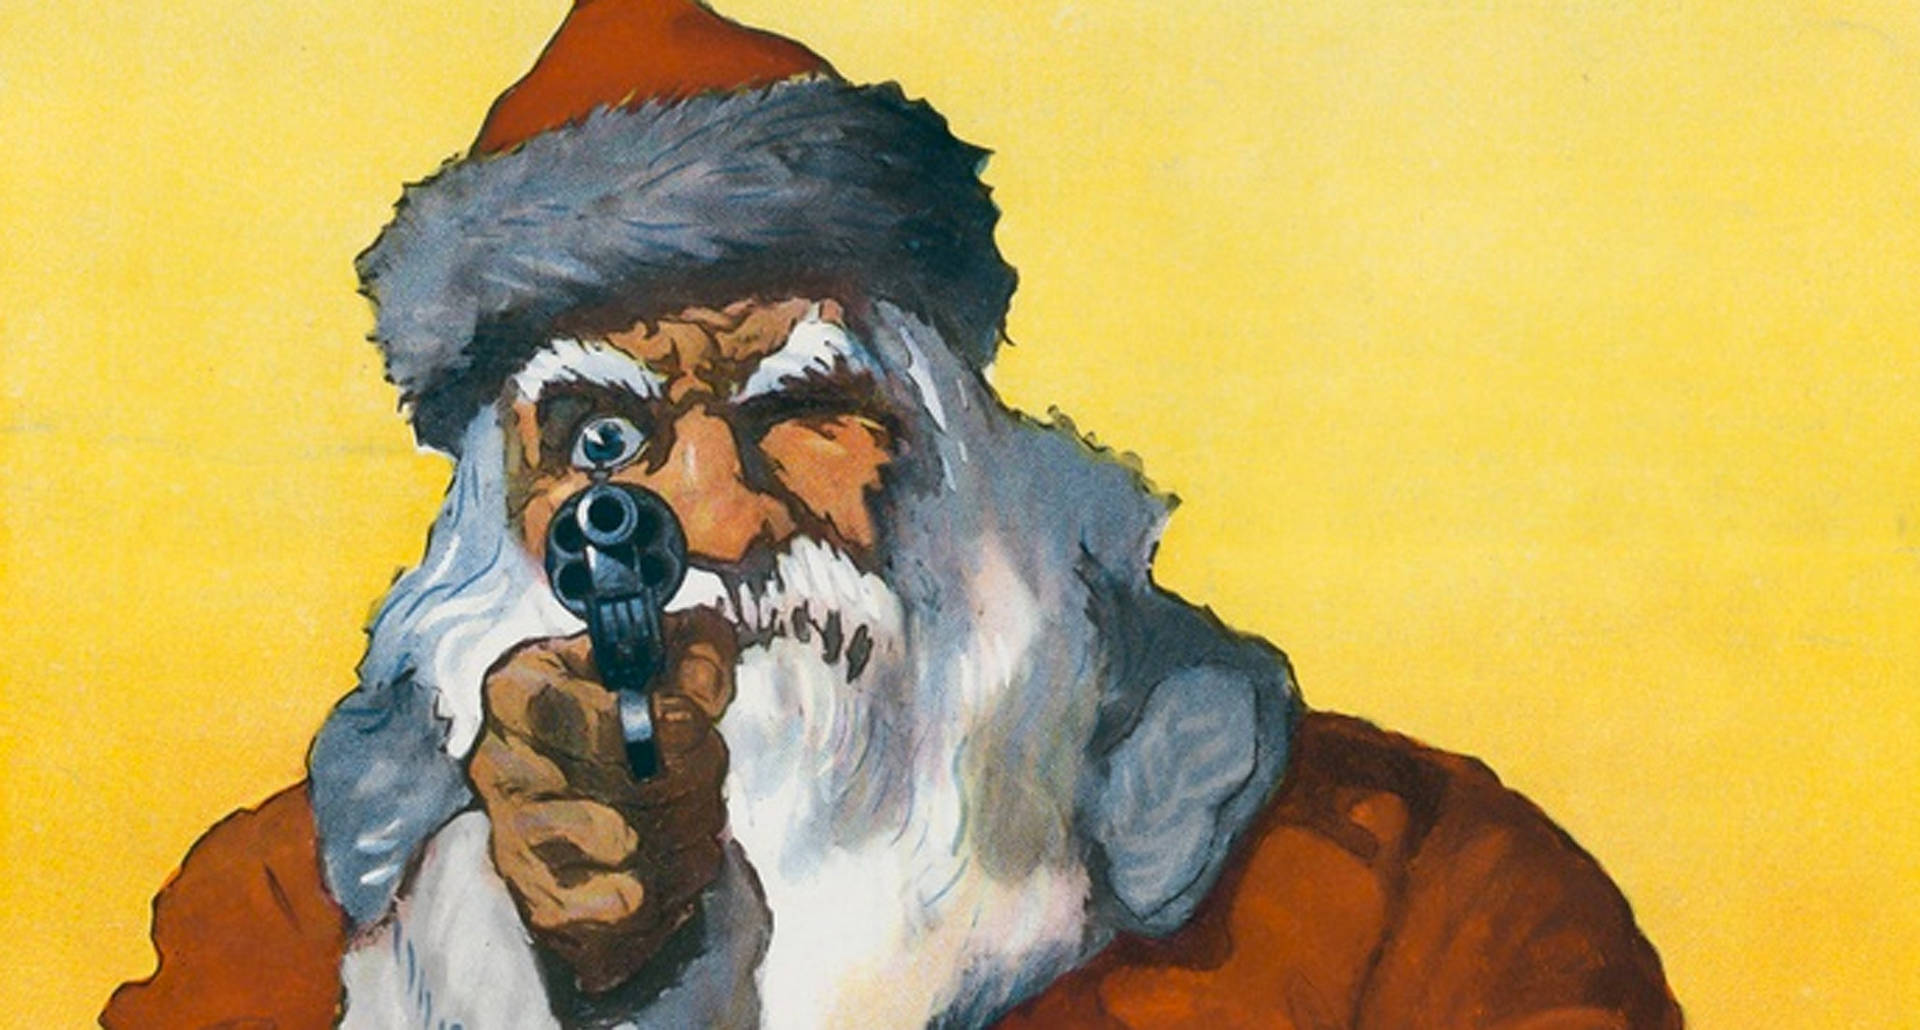 Evil Santa Points A Gun